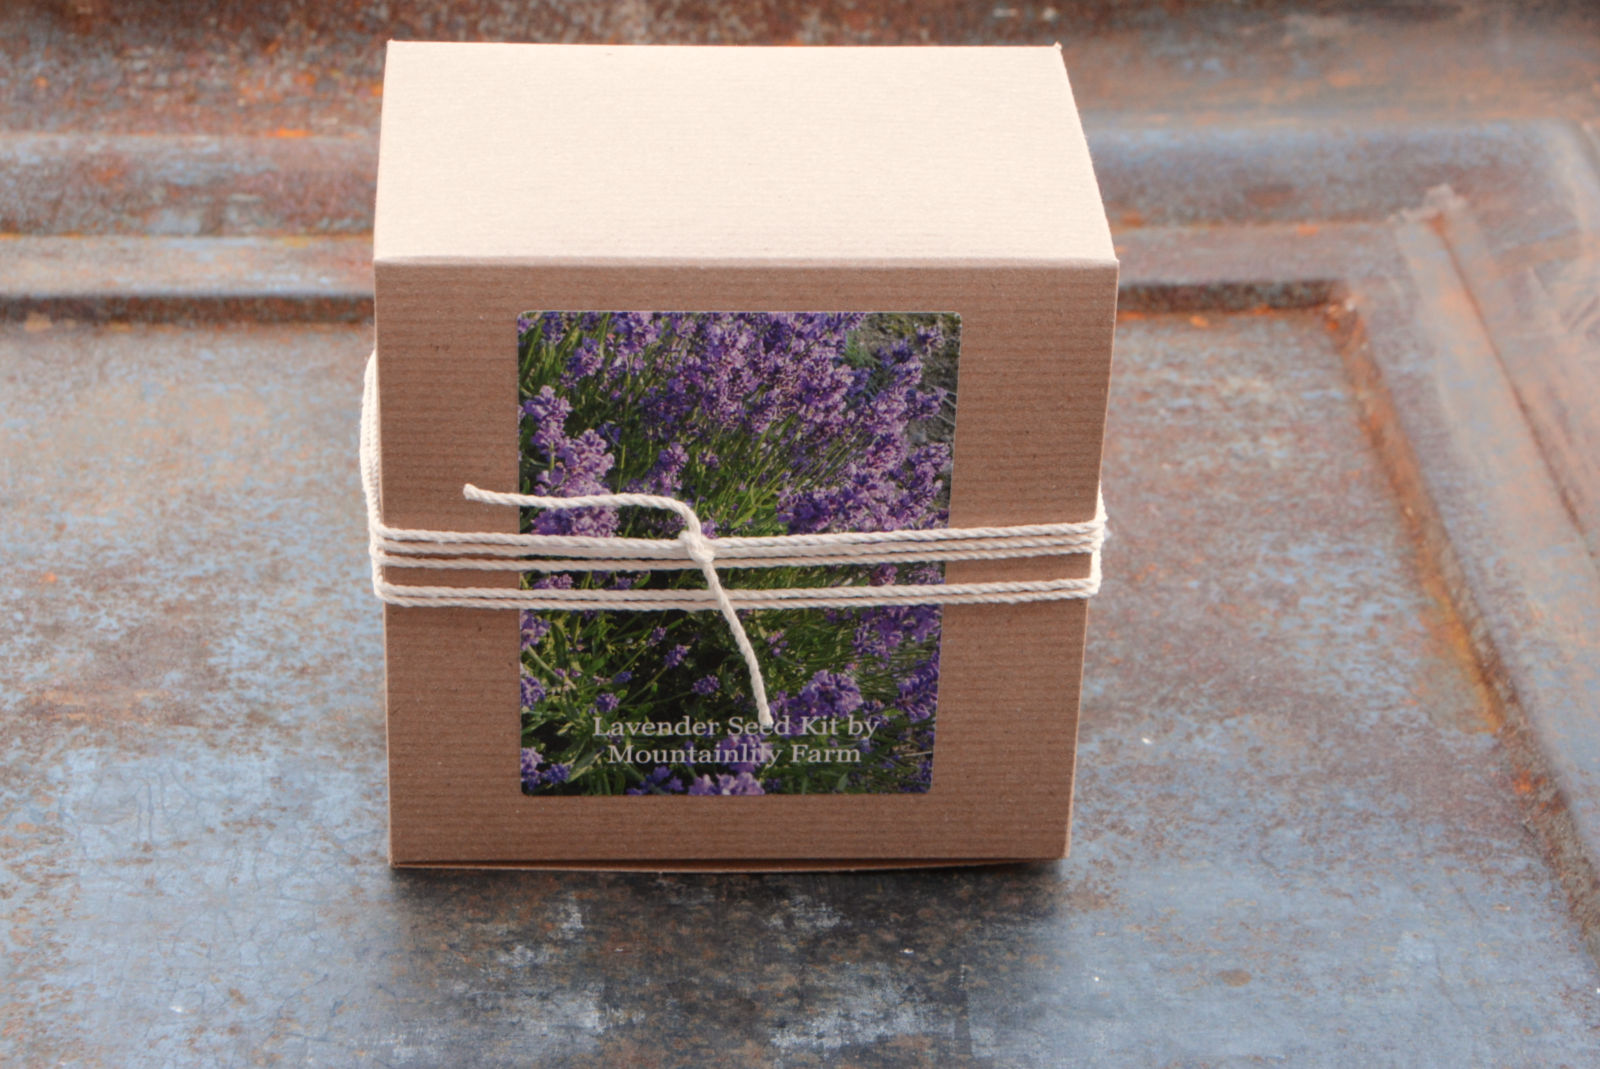 English Lavender Seeds and Garden Supplies 